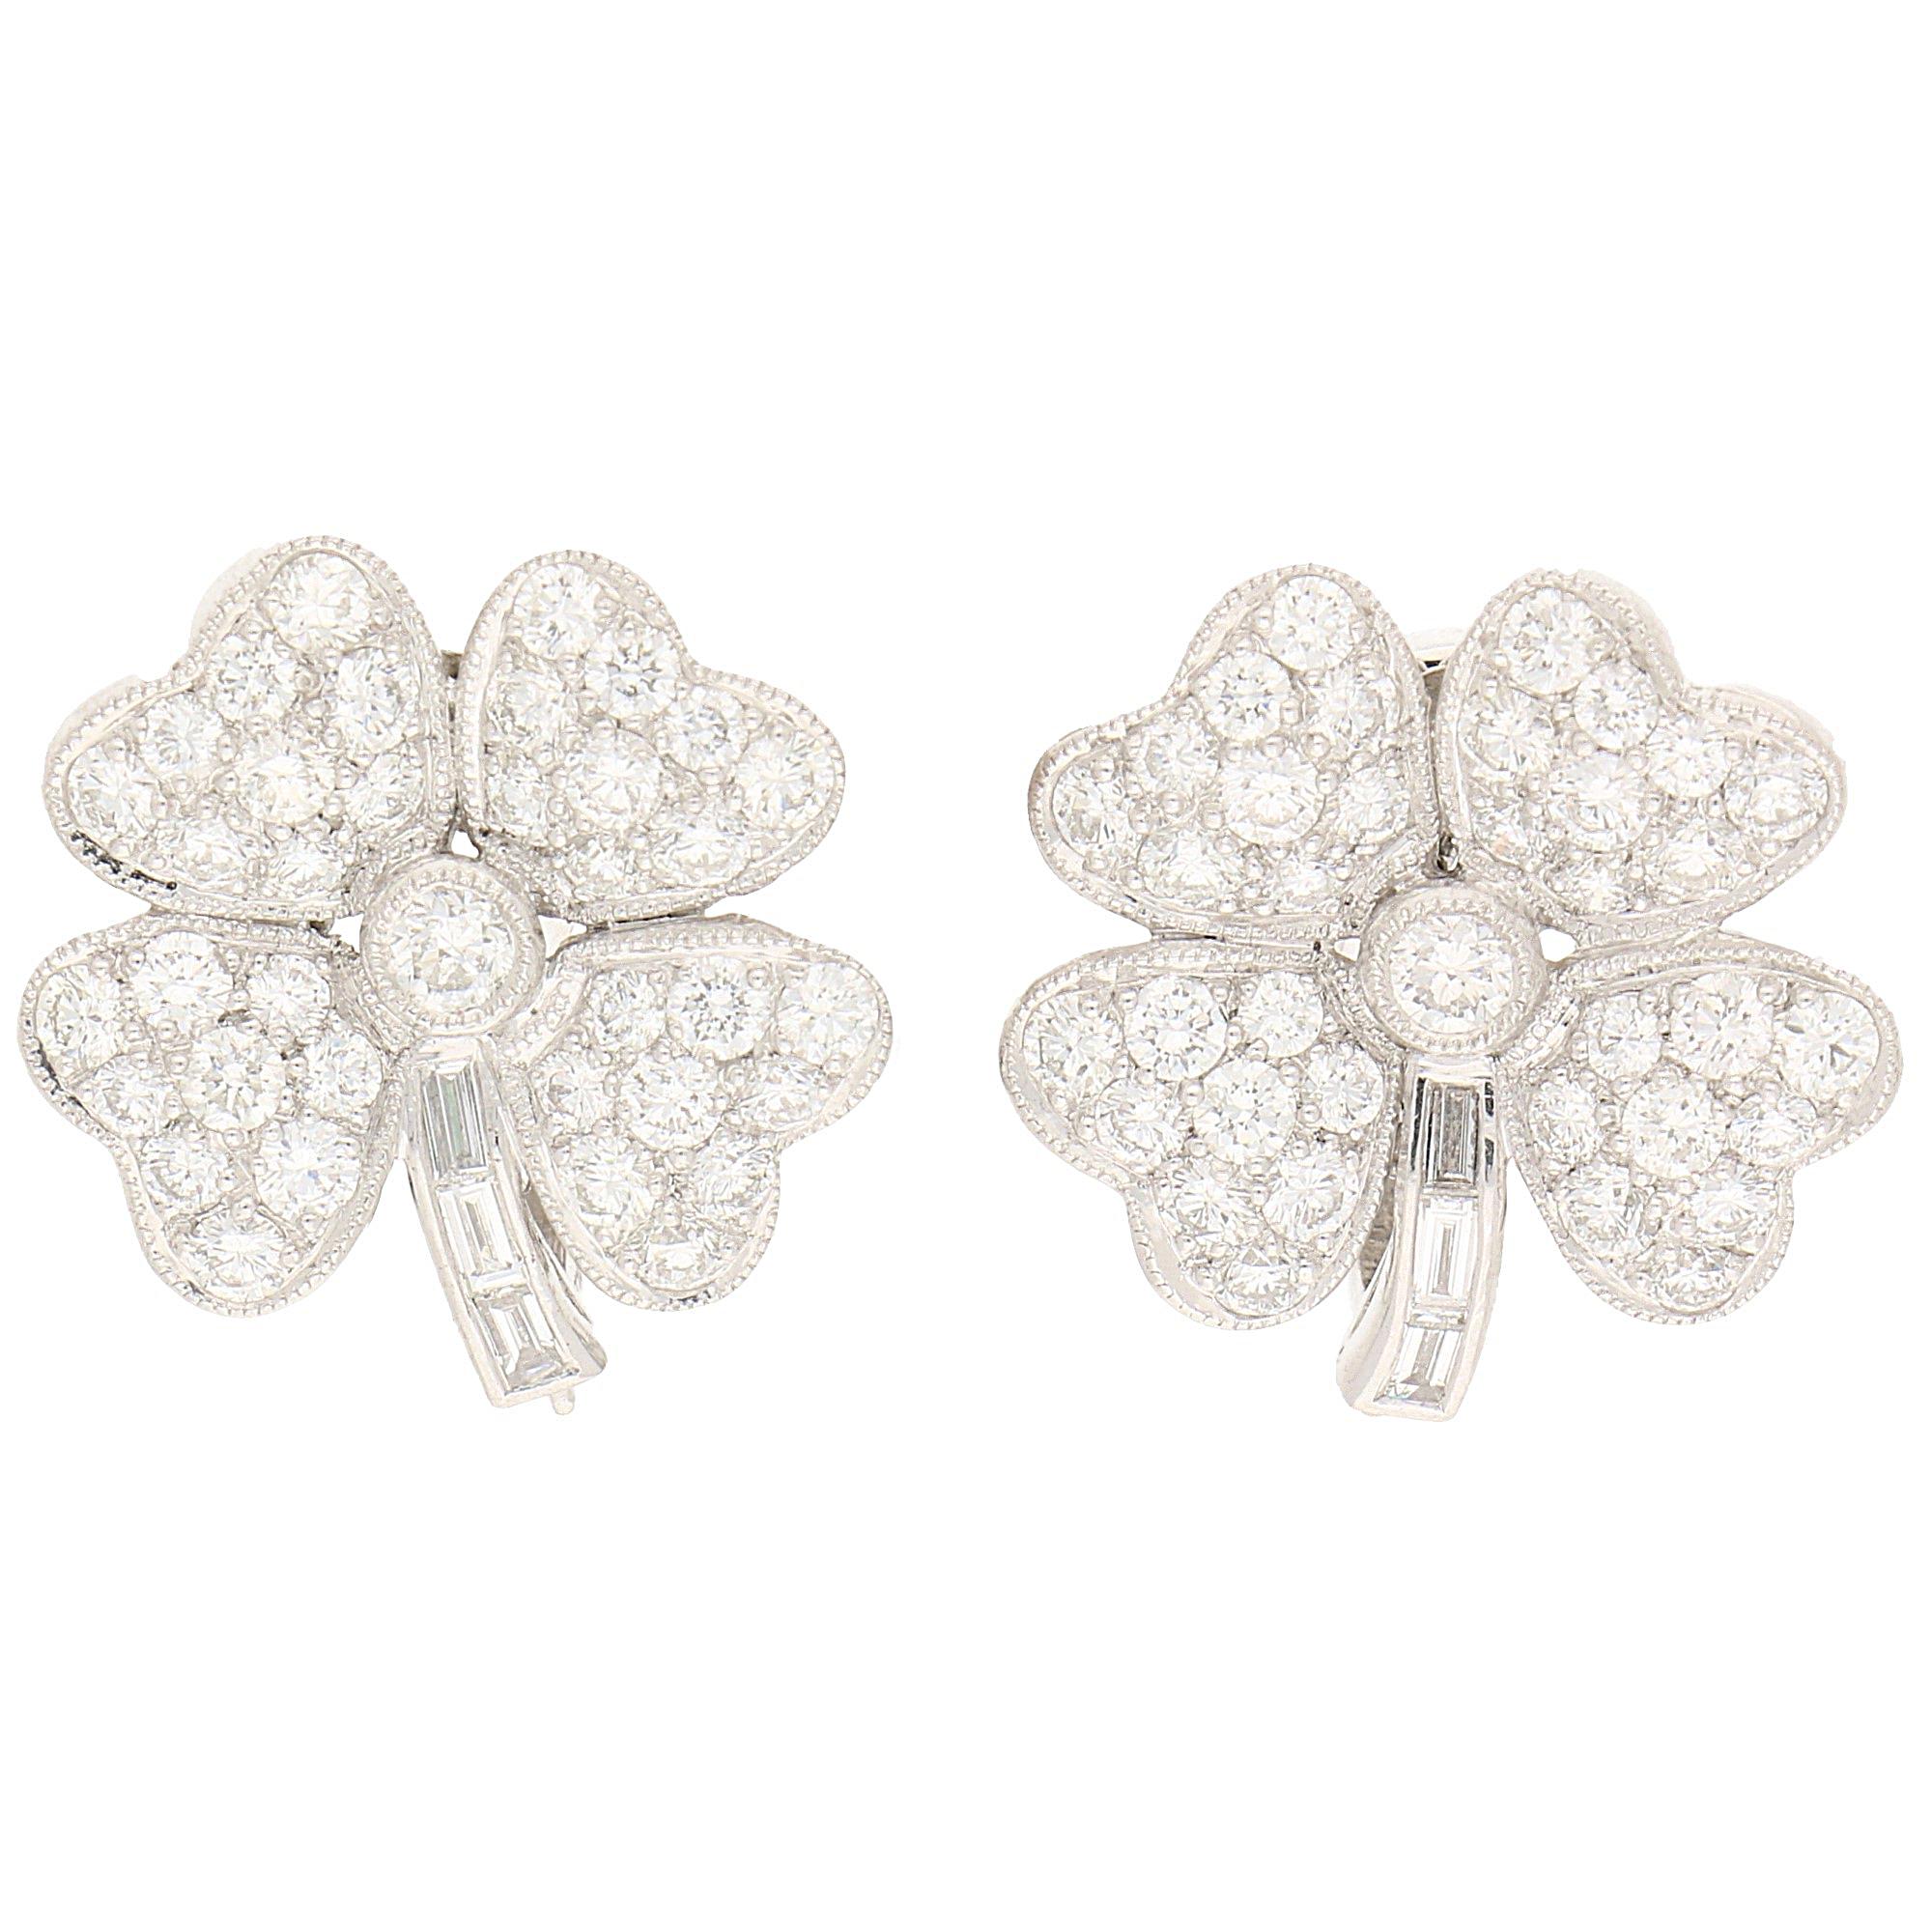 Contemporary Diamond Clover Earrings Set in Platinum